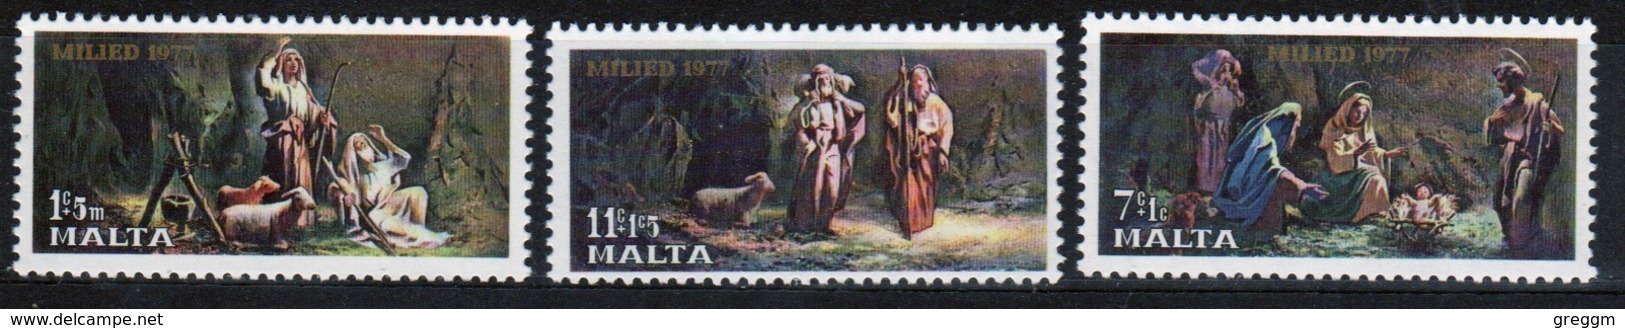 Malta 1977 Complete Set Of Stamps To Celebrate Christmas. - Malta